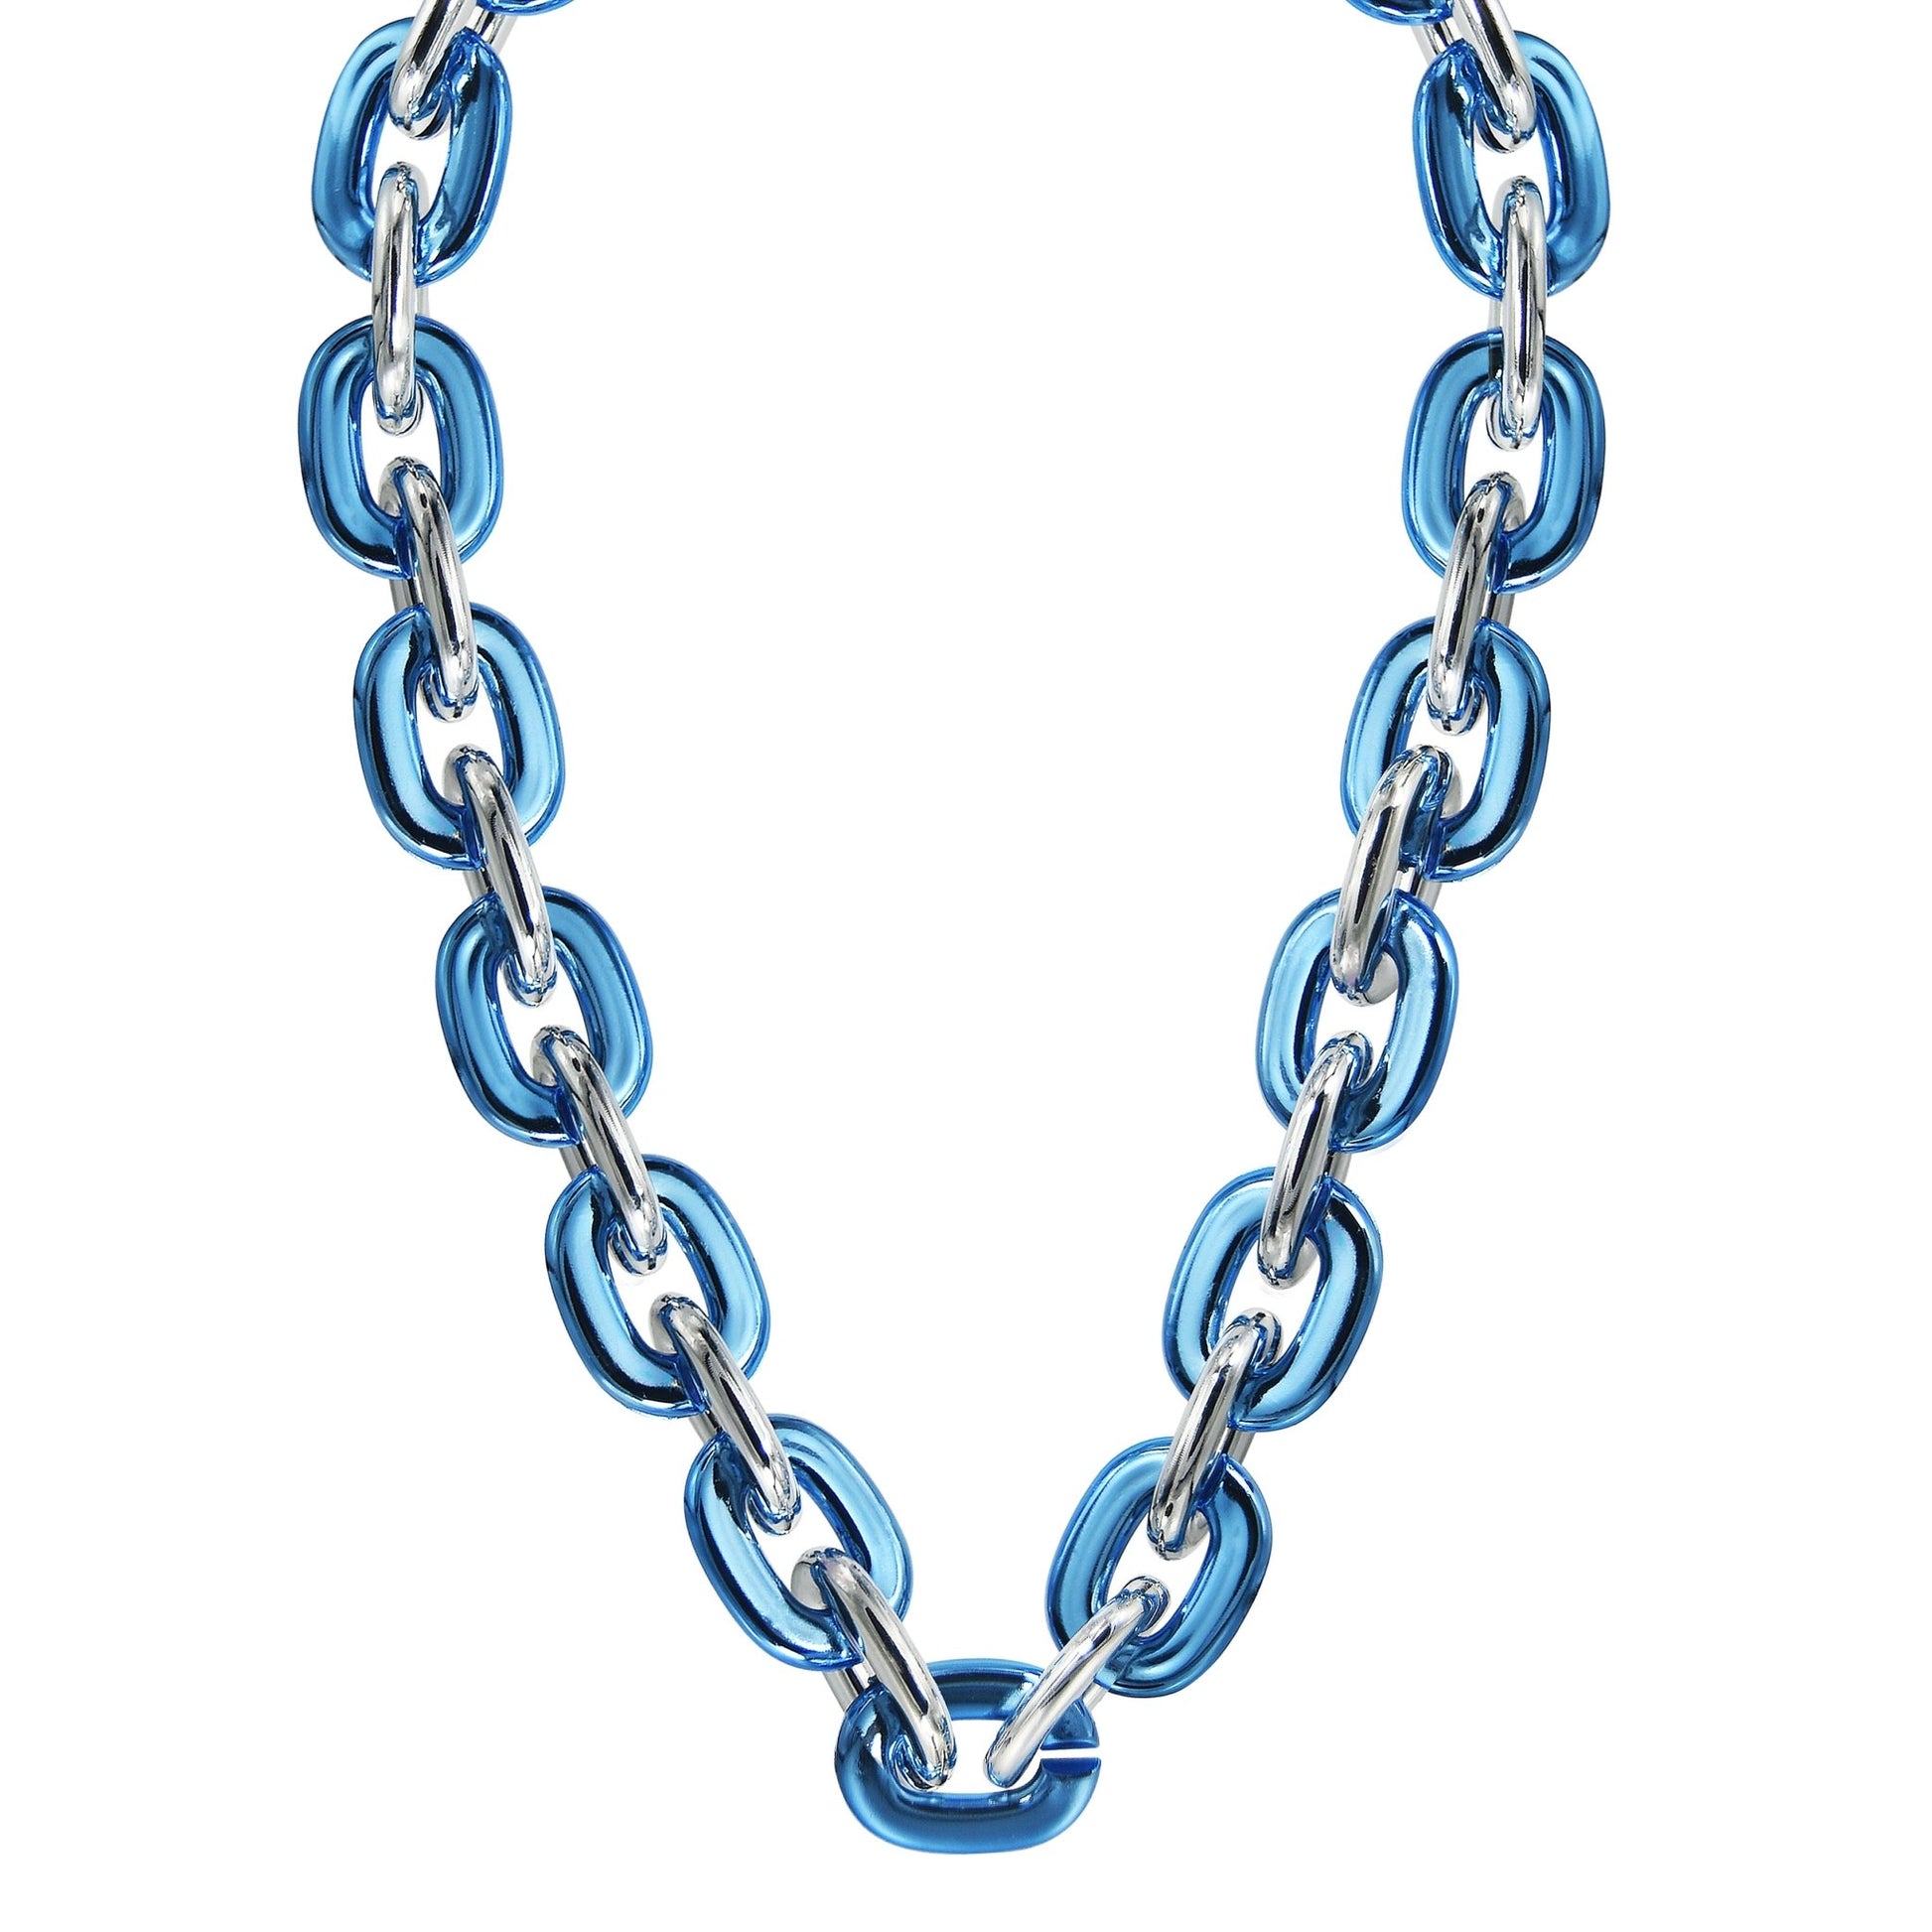 Jumbo Fan Chain Necklace - Gamedays Gear - Soft Royal Blue / Silver